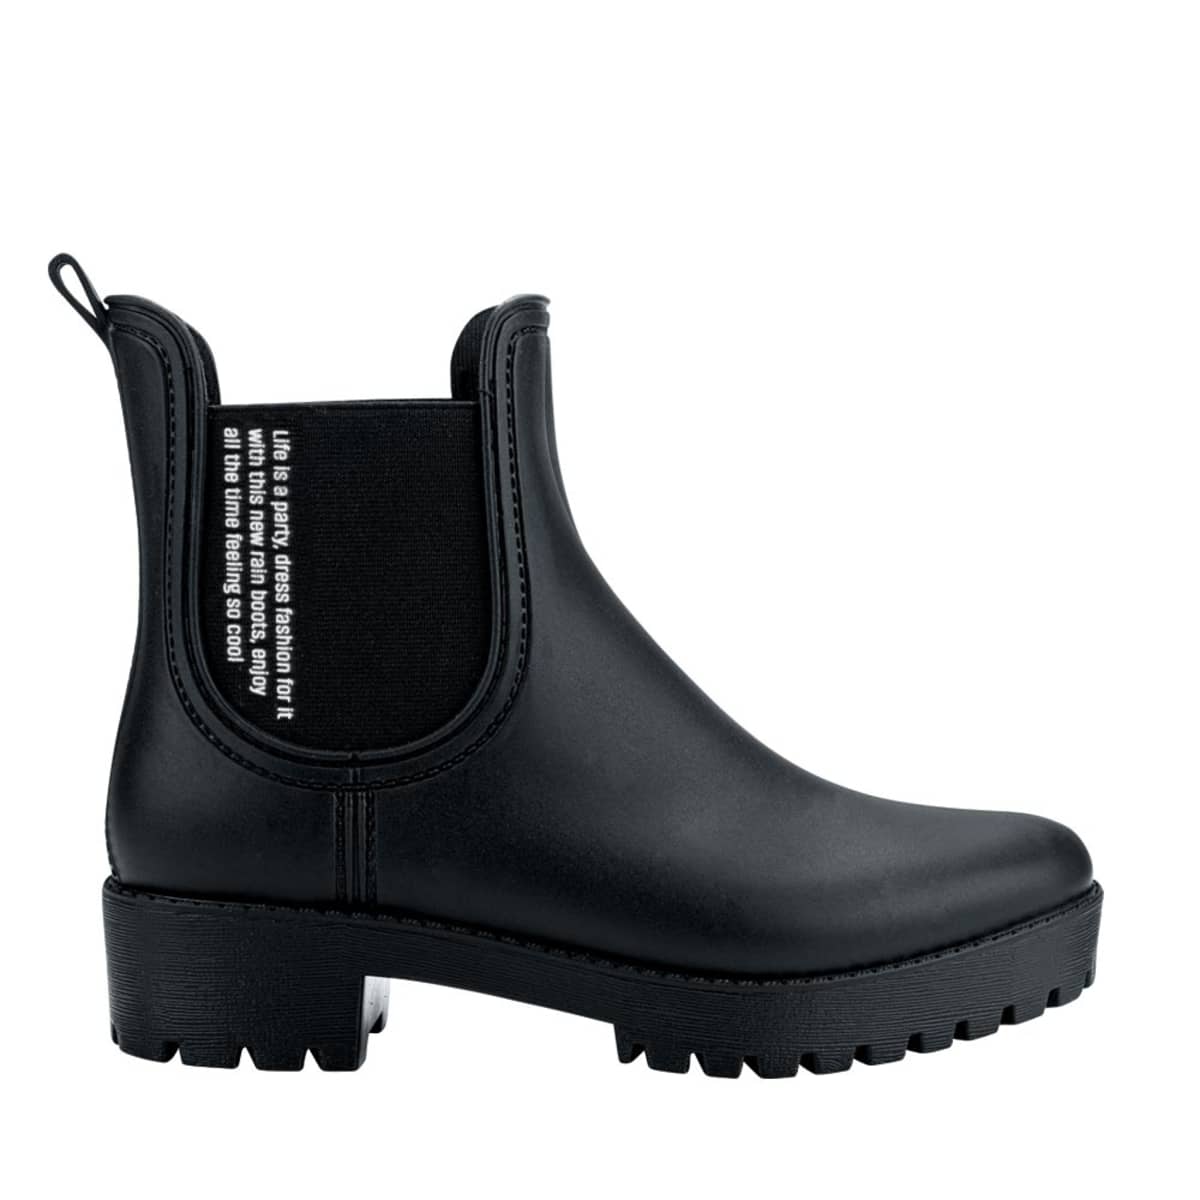 Botas de lluvia para mujer marca PBPS, color negro, mod. 1037336